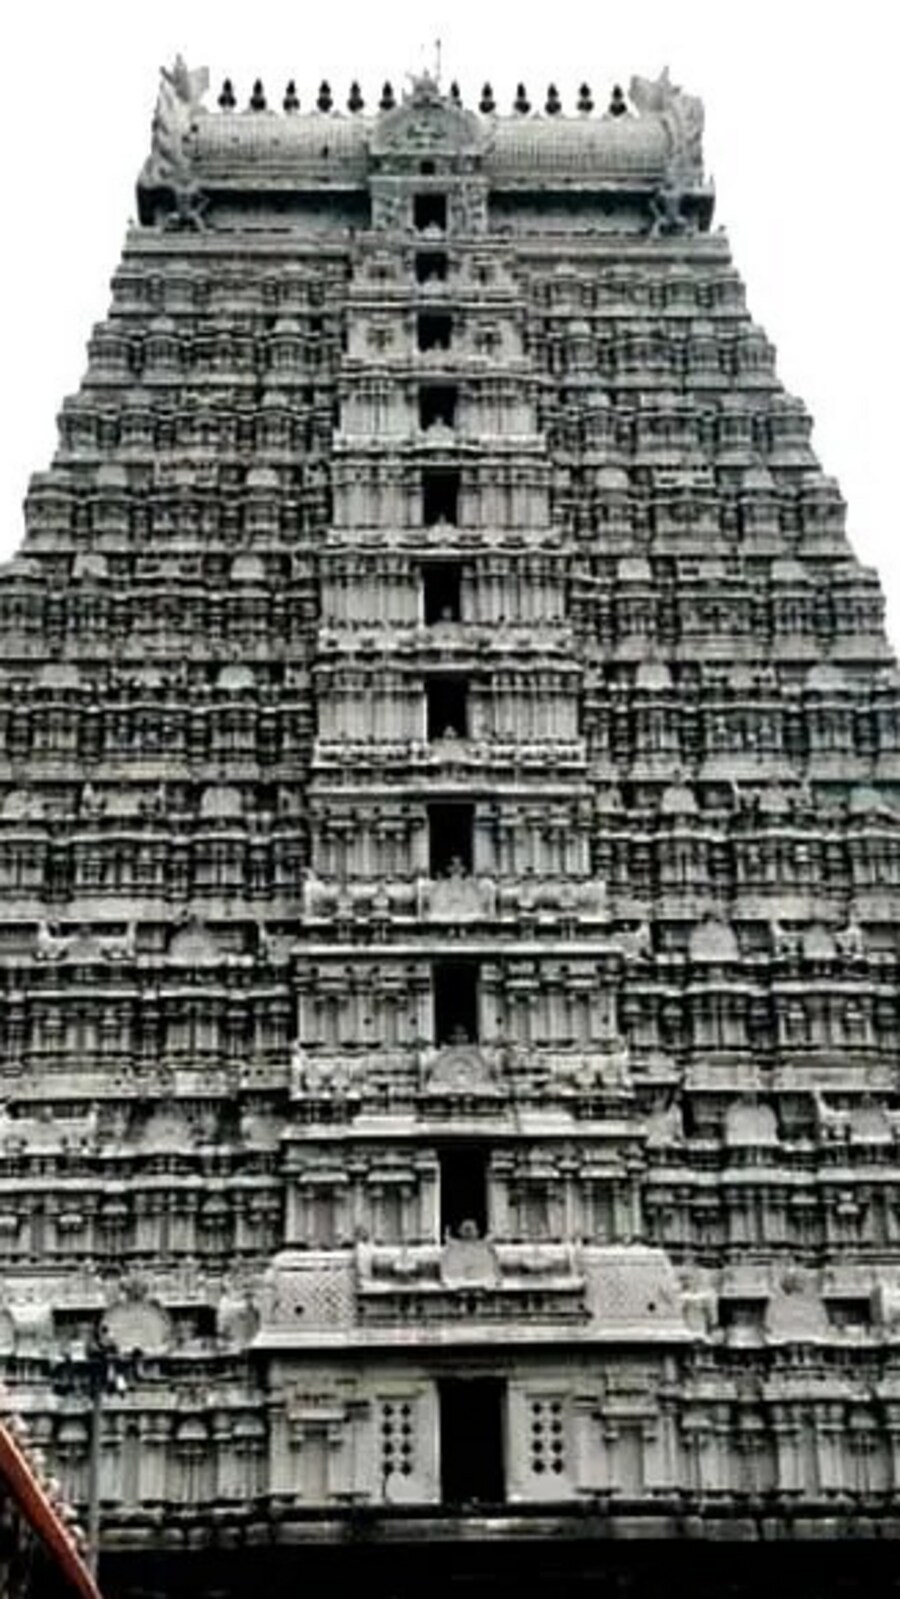 Arunachalam Temple: বিশ্বের সবচেয়ে উঁচু শিব মন্দির দক্ষিণ ভারতে, কত ফুট দীর্ঘ জানলে চমকে যাবেন